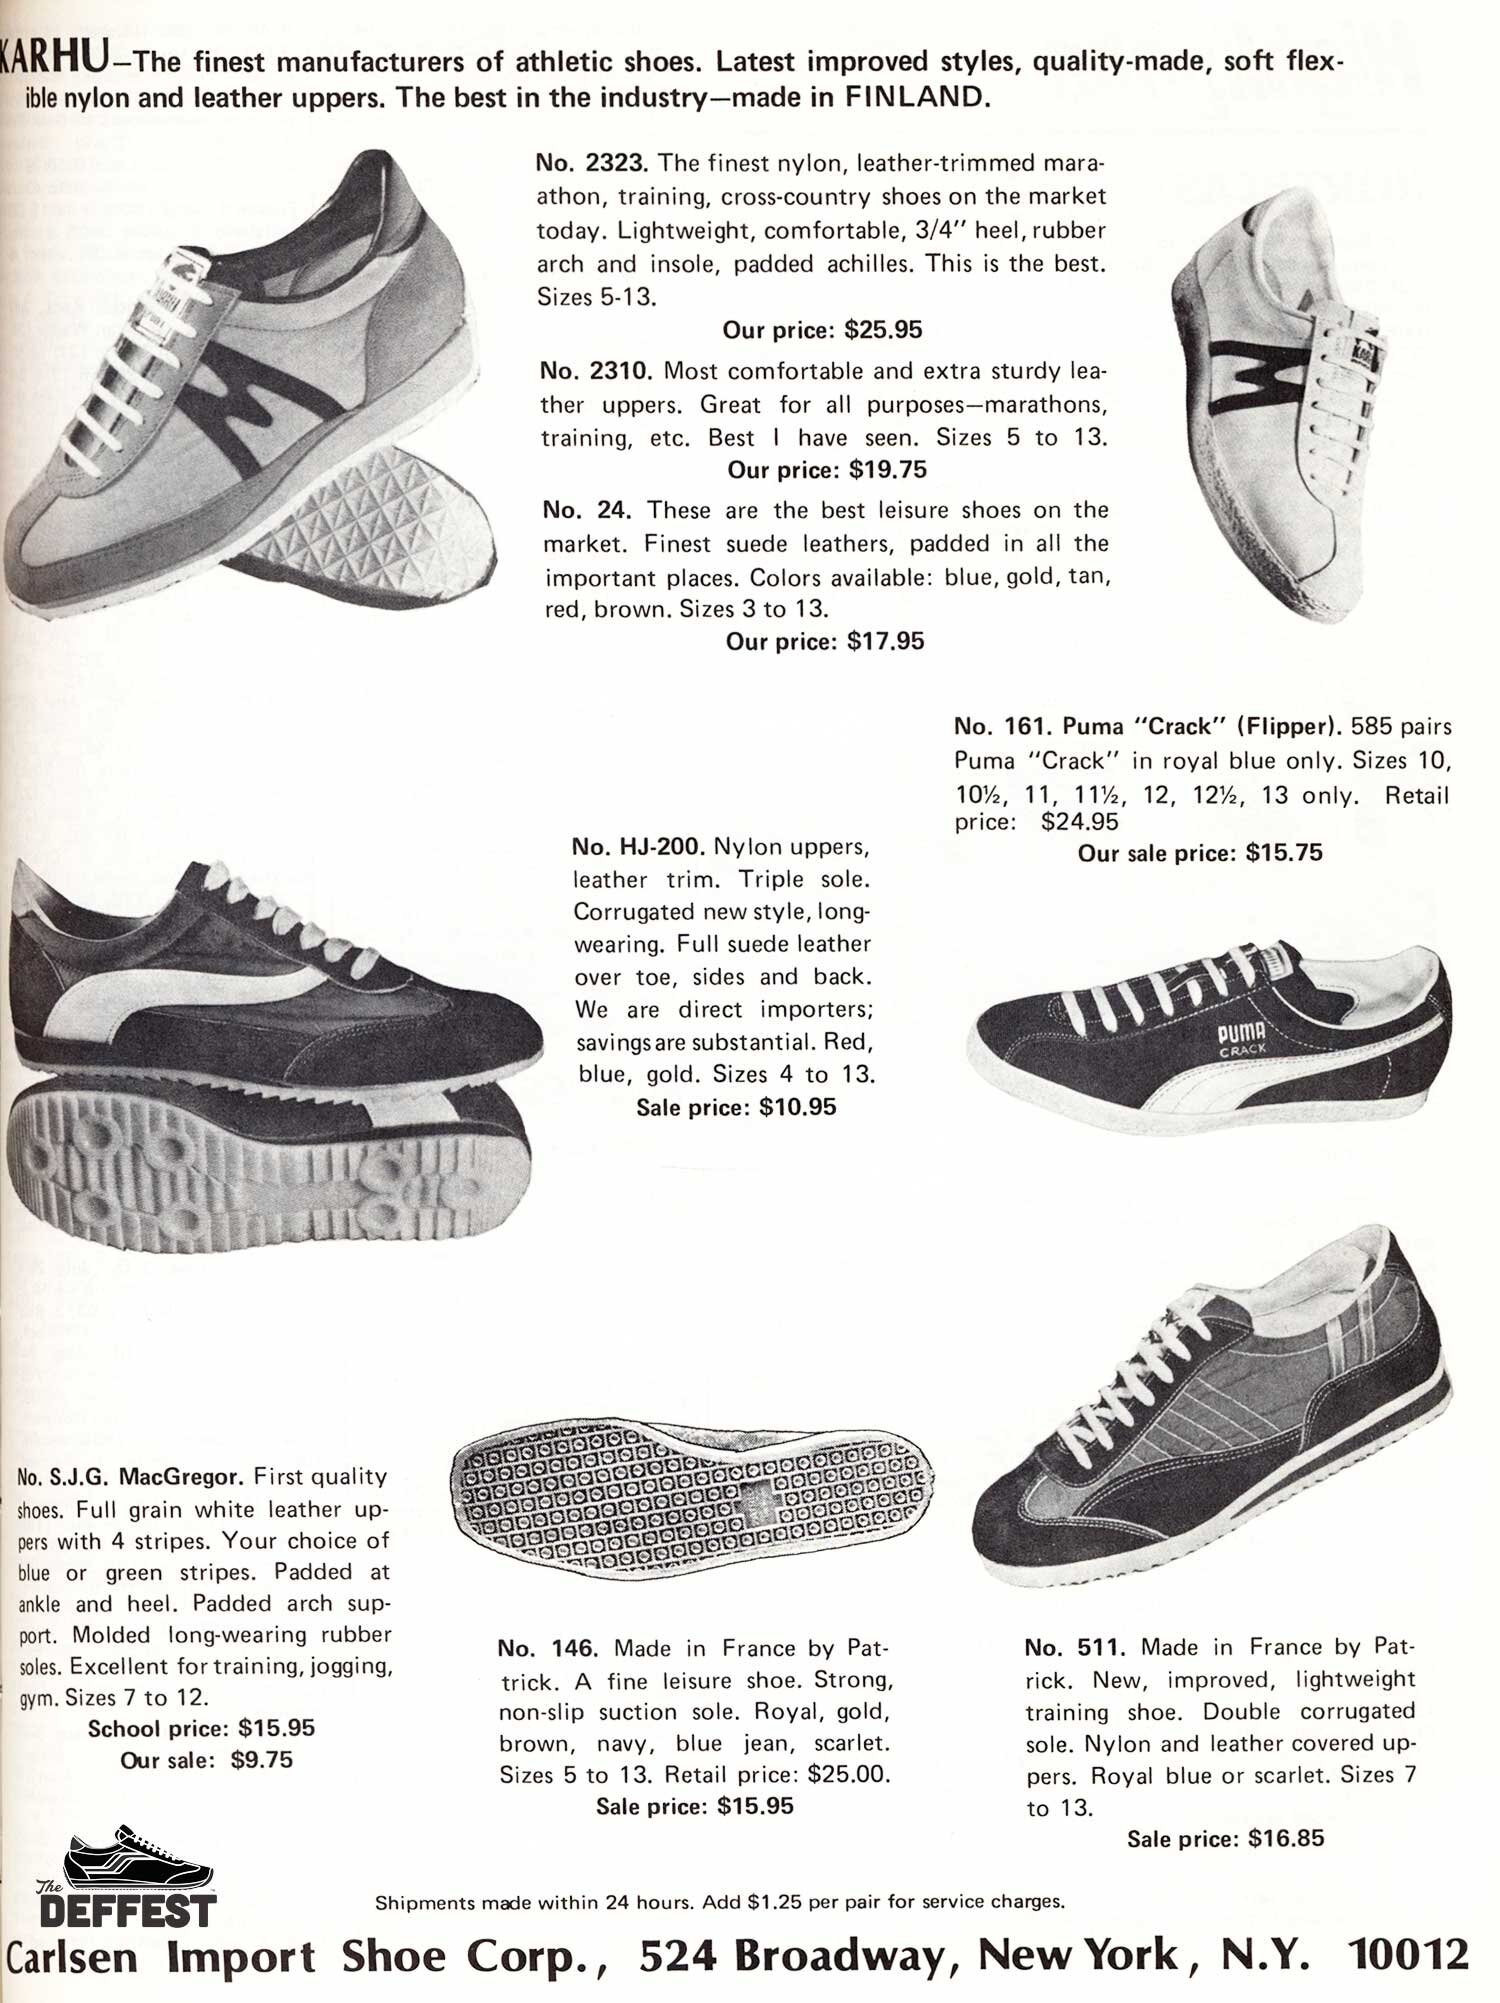 converse 80's shoes quality